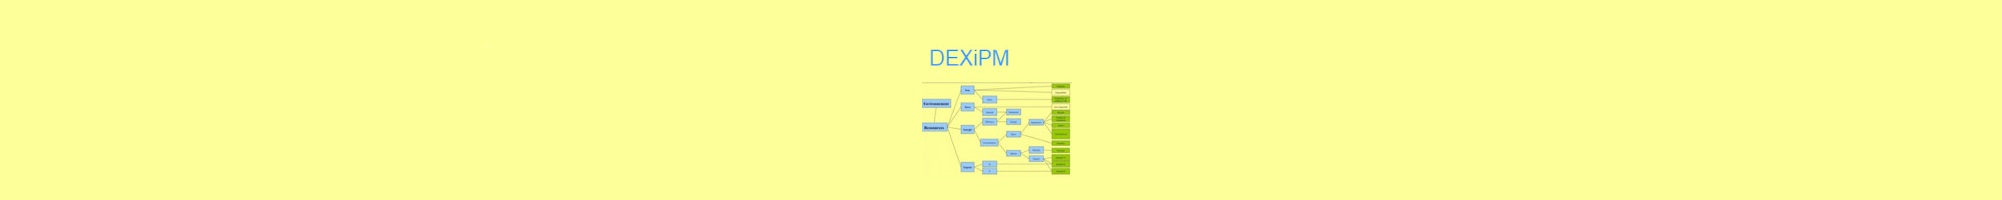 Presentation of DEXiPM